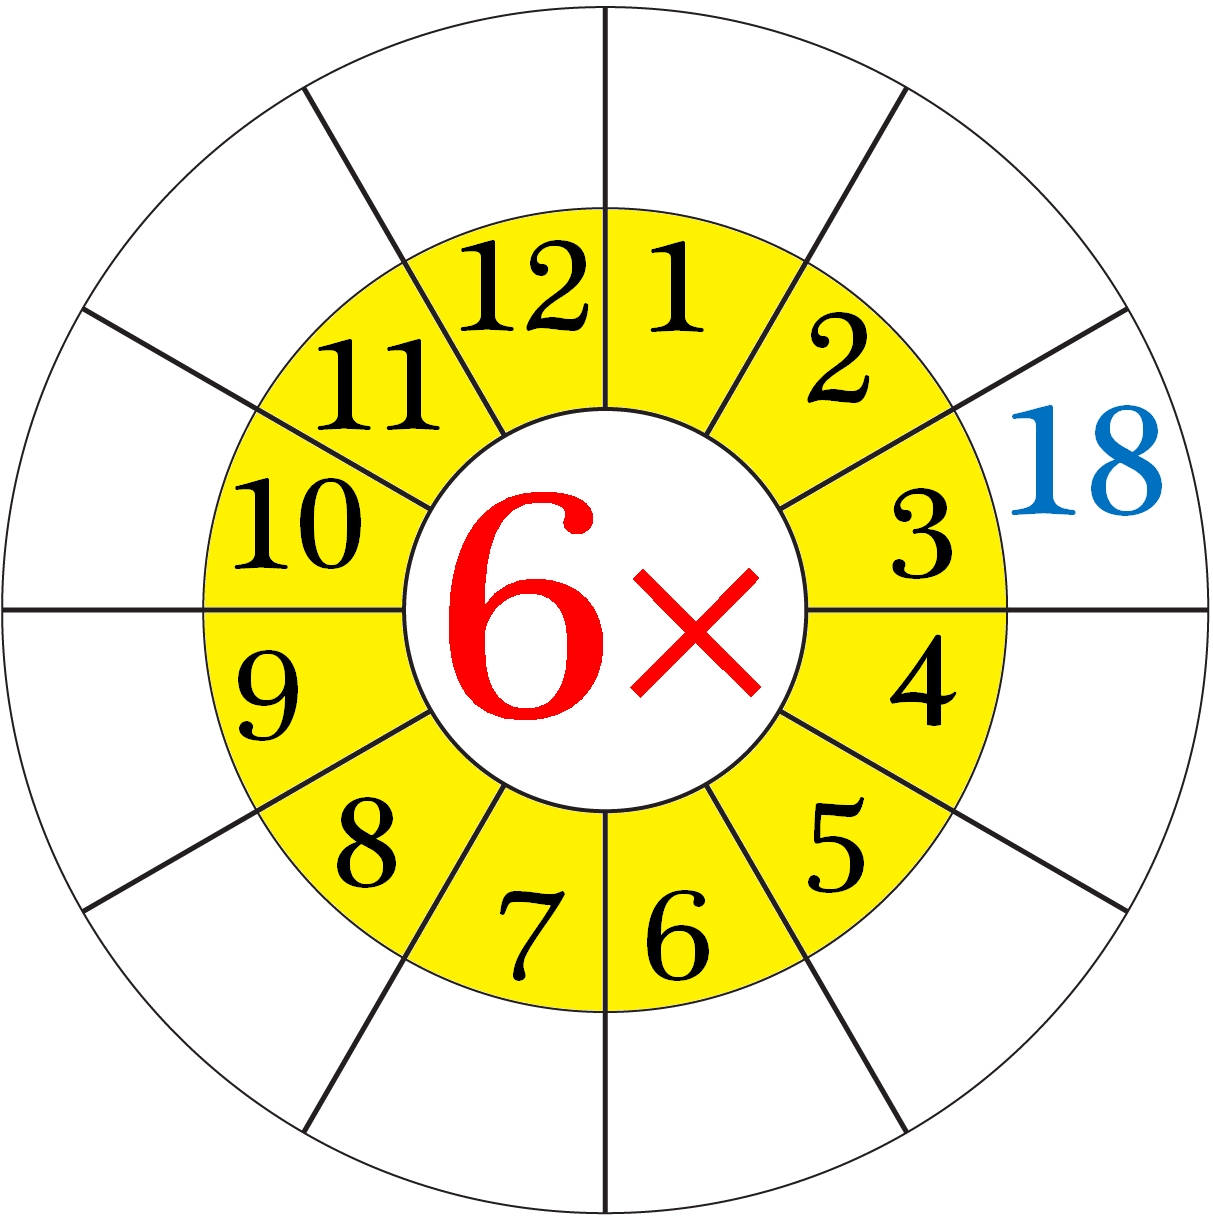 Worksheet on Multiplication Table of 6